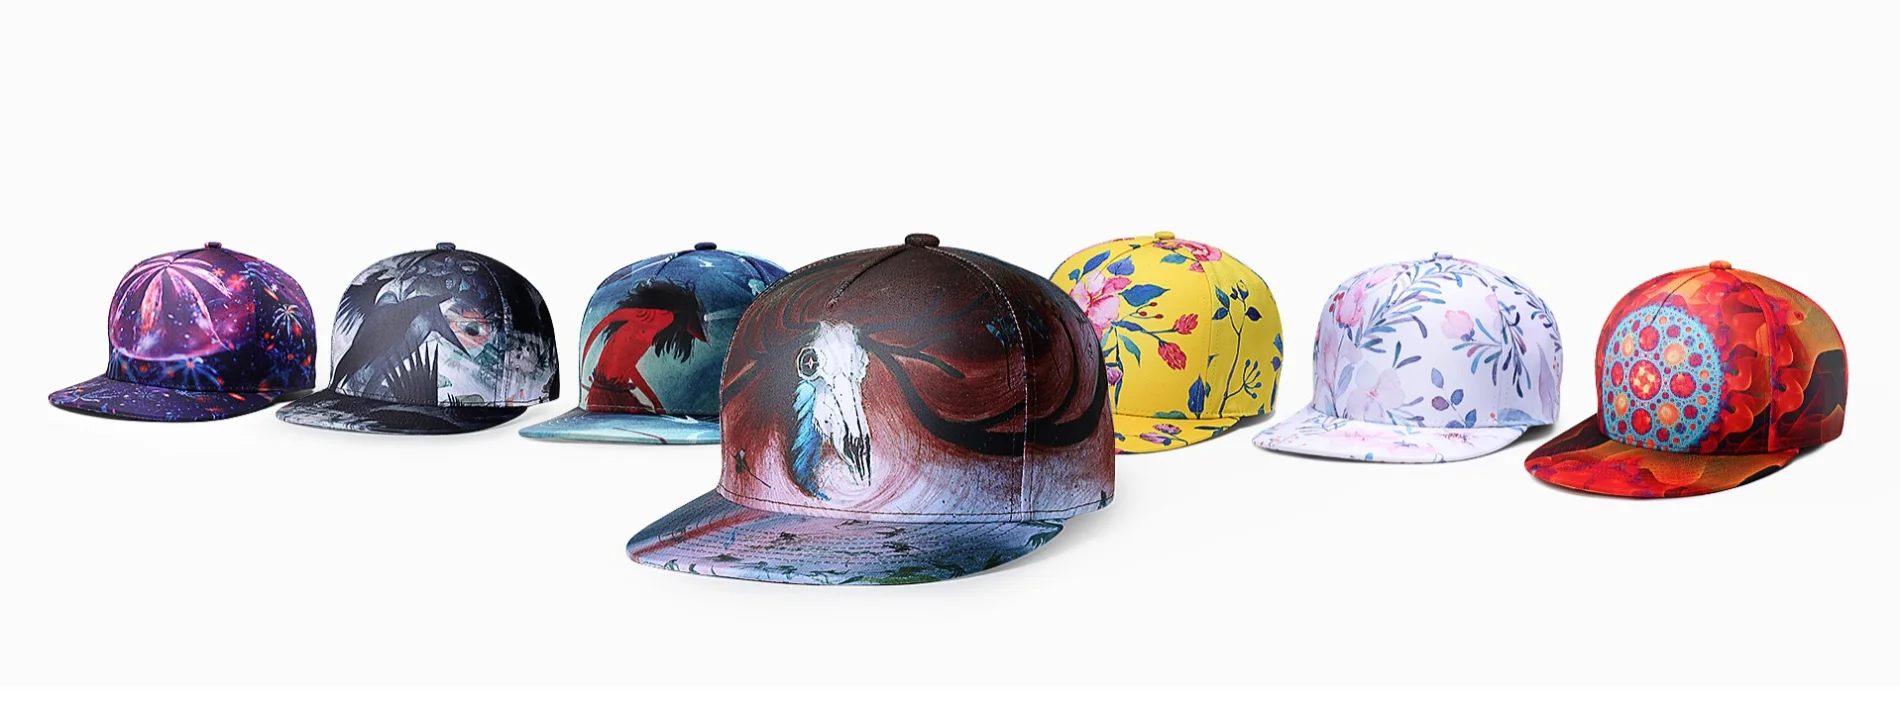 Adjustable Snapbacks Hats Men woman adult hip hop outdoor casual cap Fashion print baseball Snap back caps Multicolor